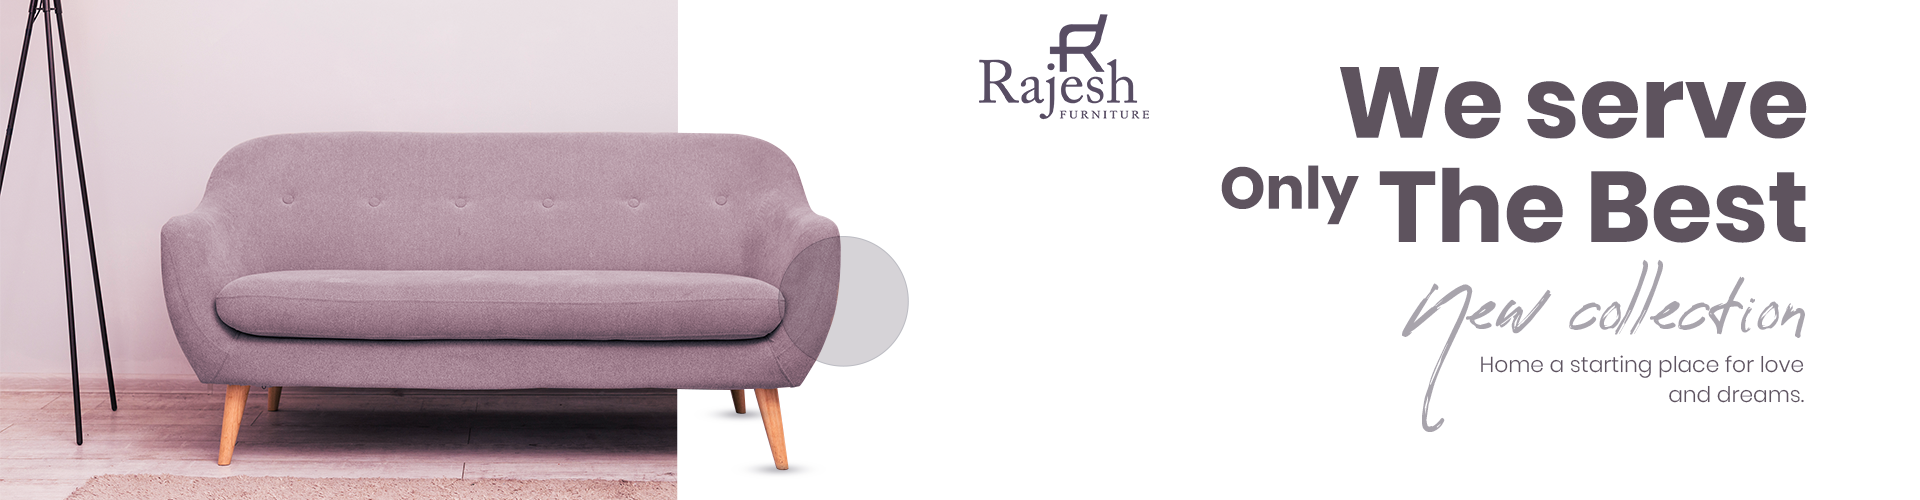 Rajesh-furniture-banner_sofo-1920_500-2